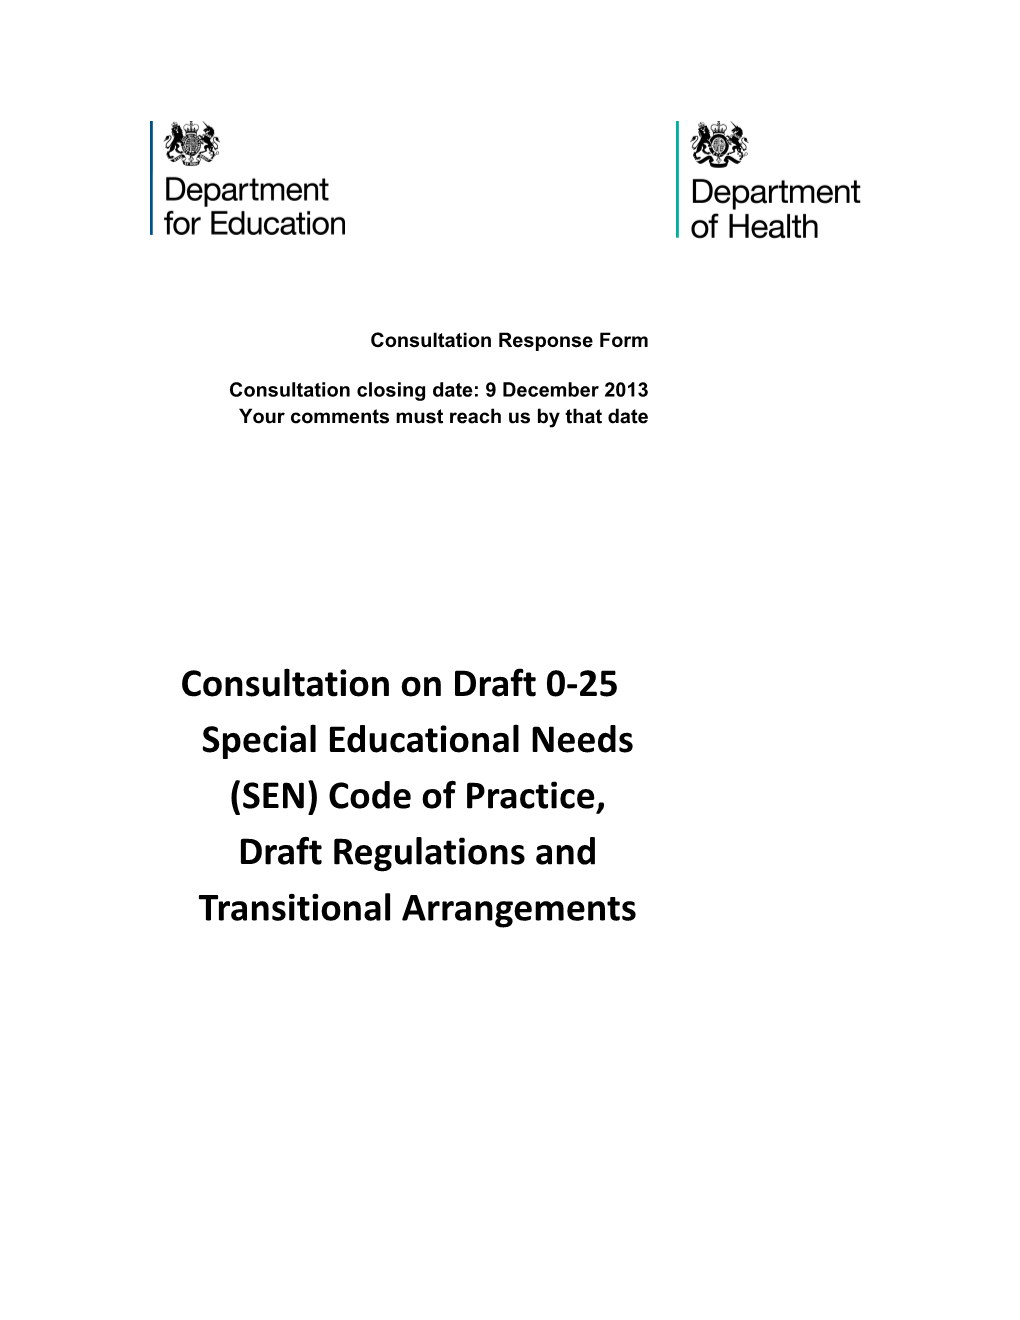 Consultation on Draft 0-25 Special Educational Needs (SEN) Code of Practice, Draft Regulations